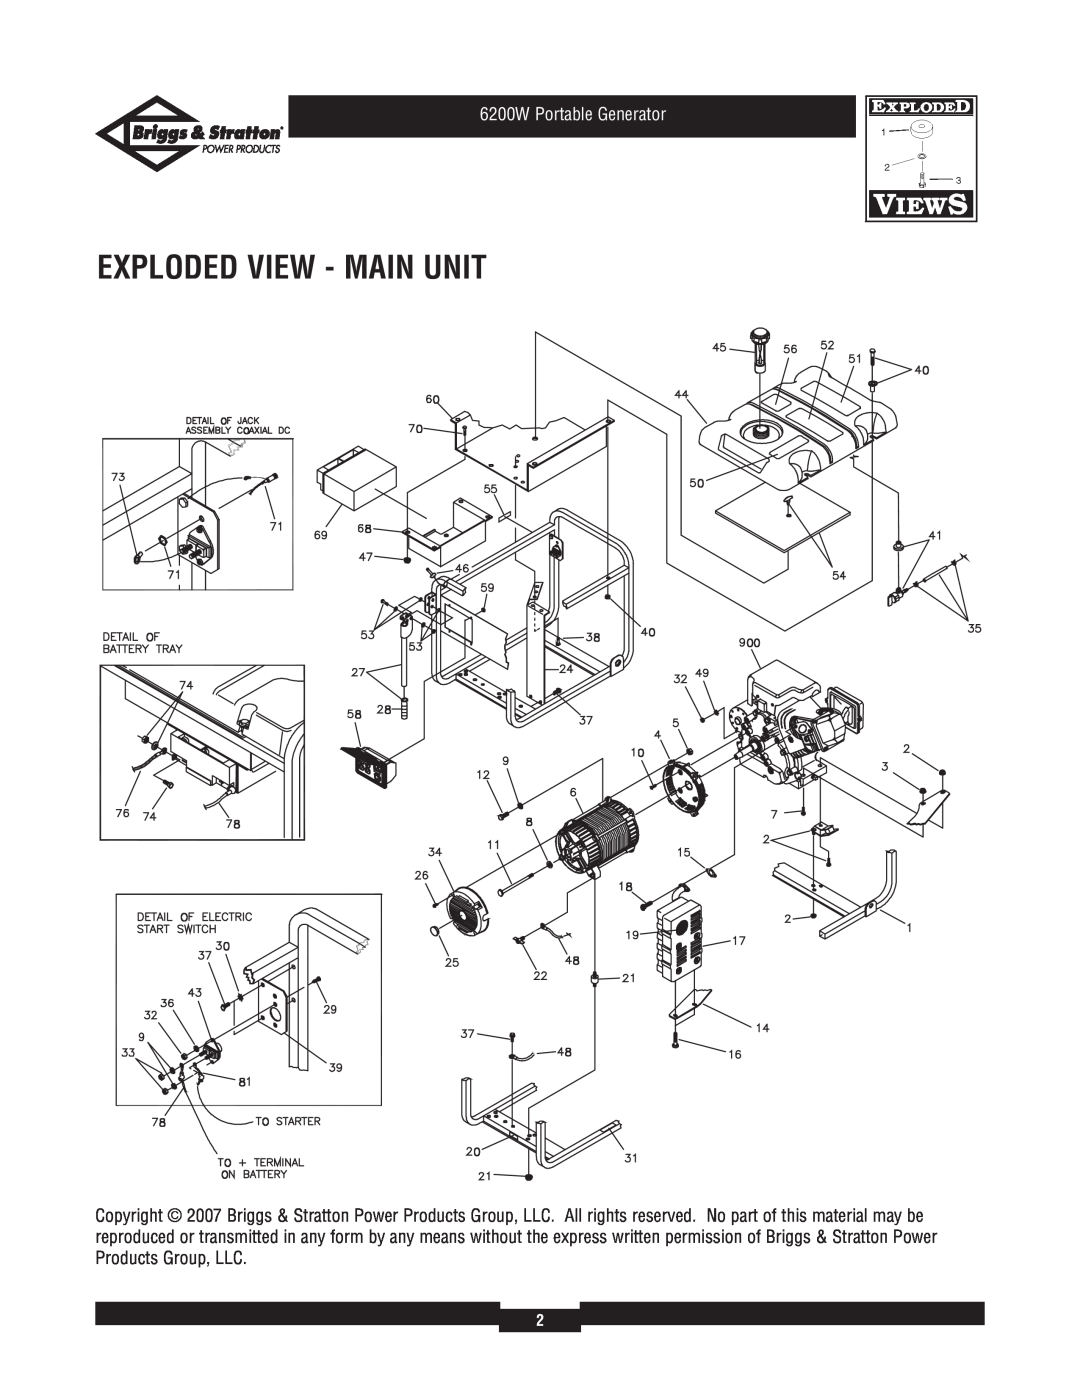 Briggs & Stratton 030211-1 manual Exploded View - Main Unit, 6200W Portable Generator 